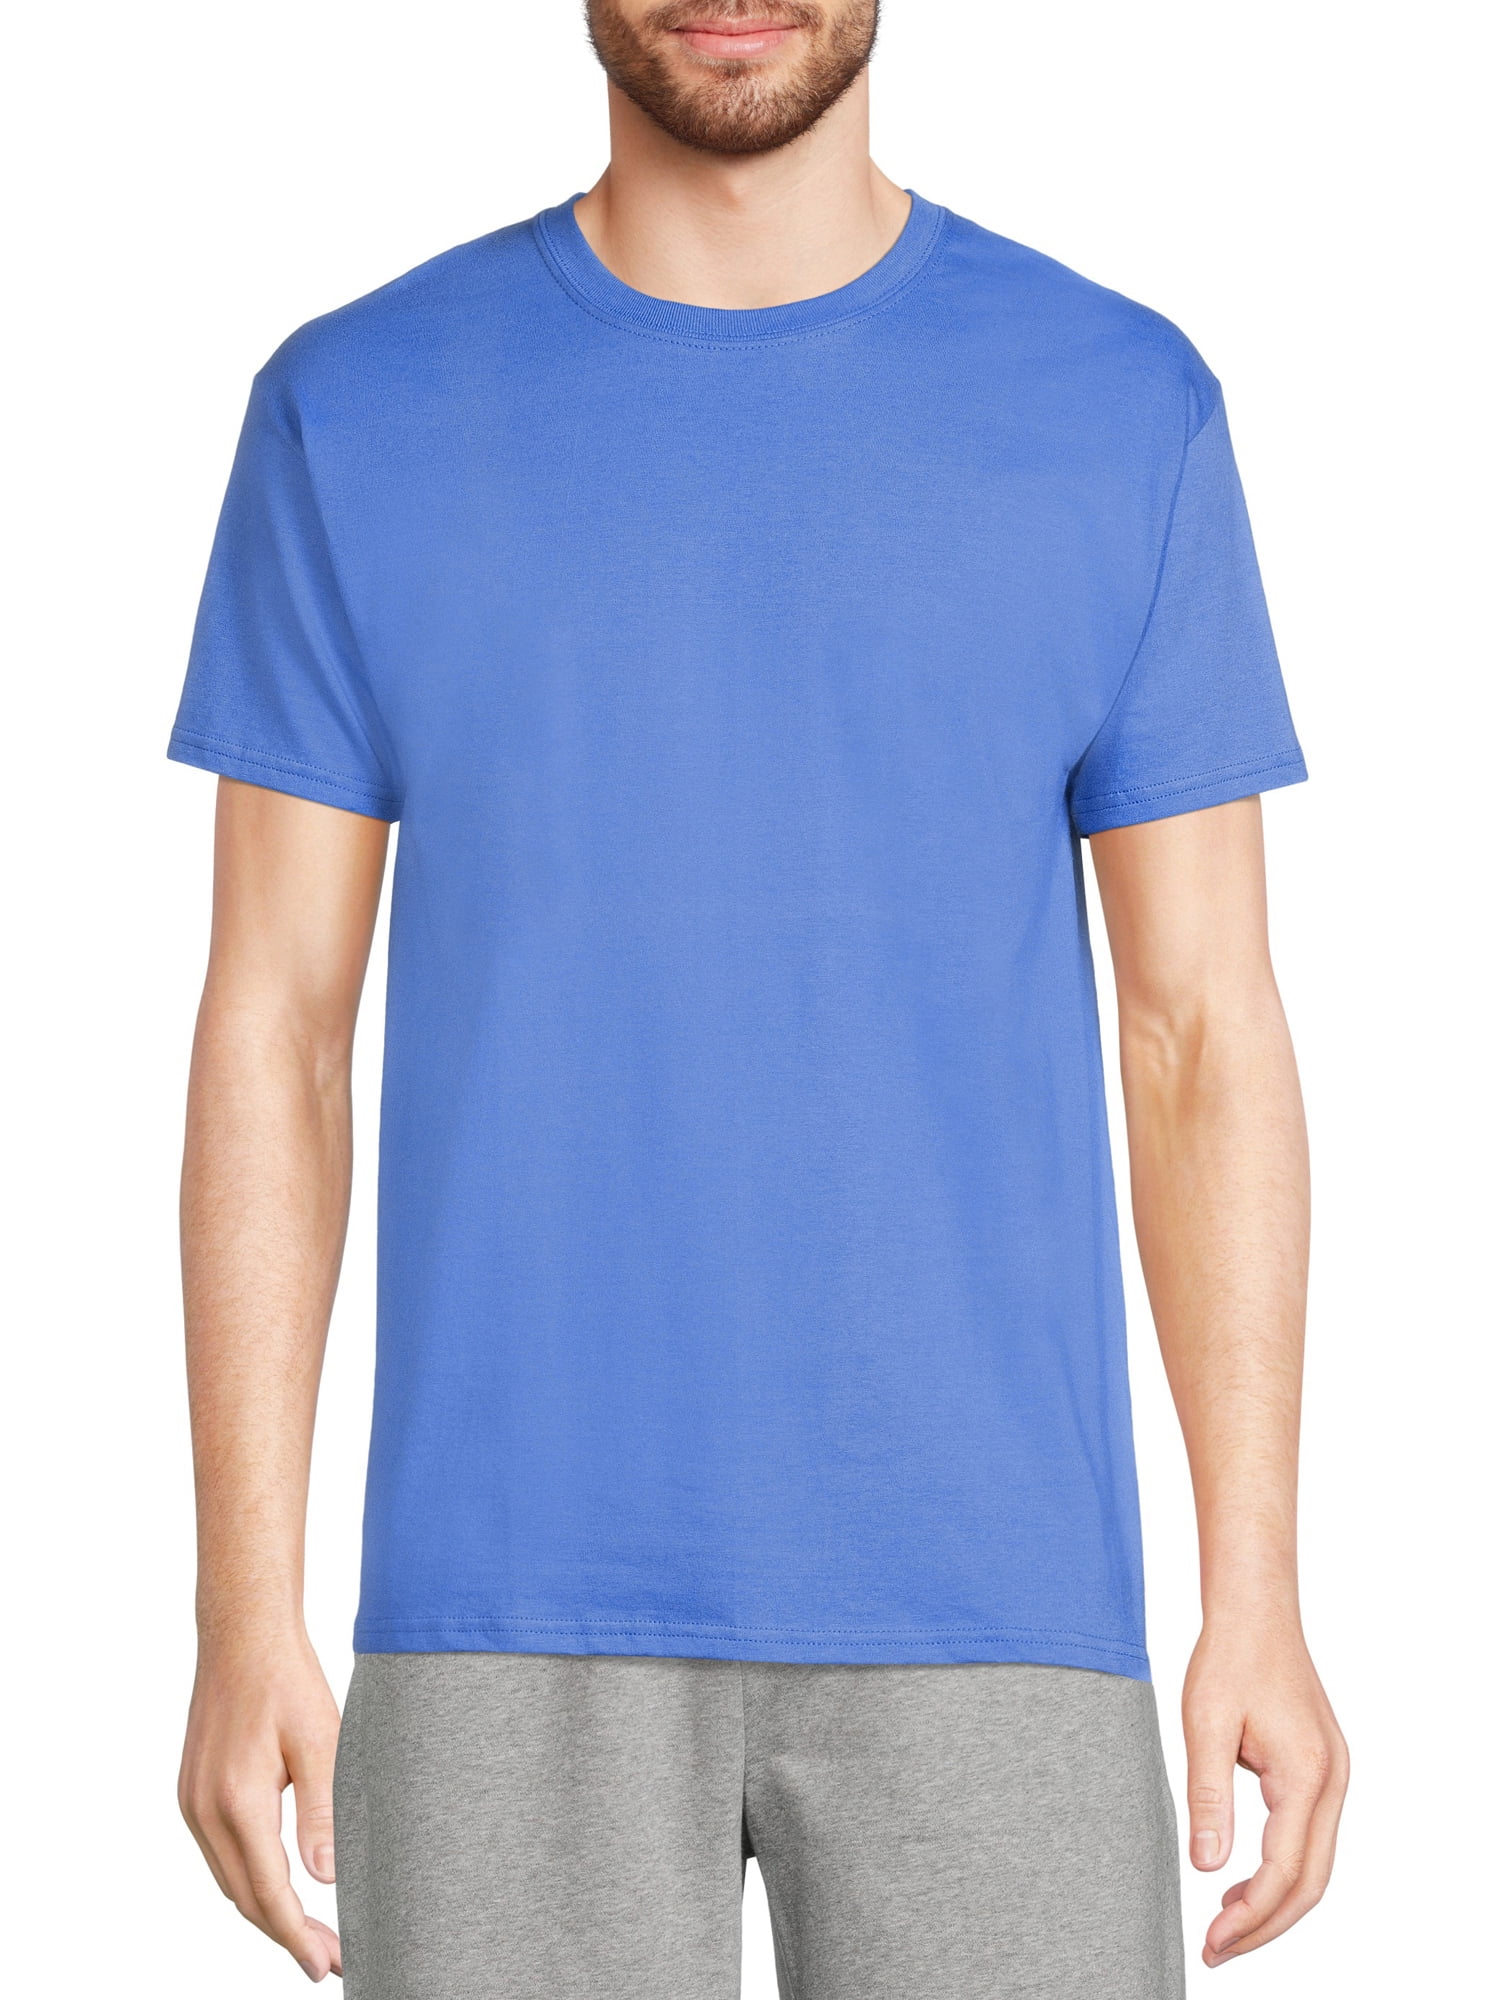 Athletic Works Men's and Men's T-Shirt, Sizes S-4XL - Walmart.com